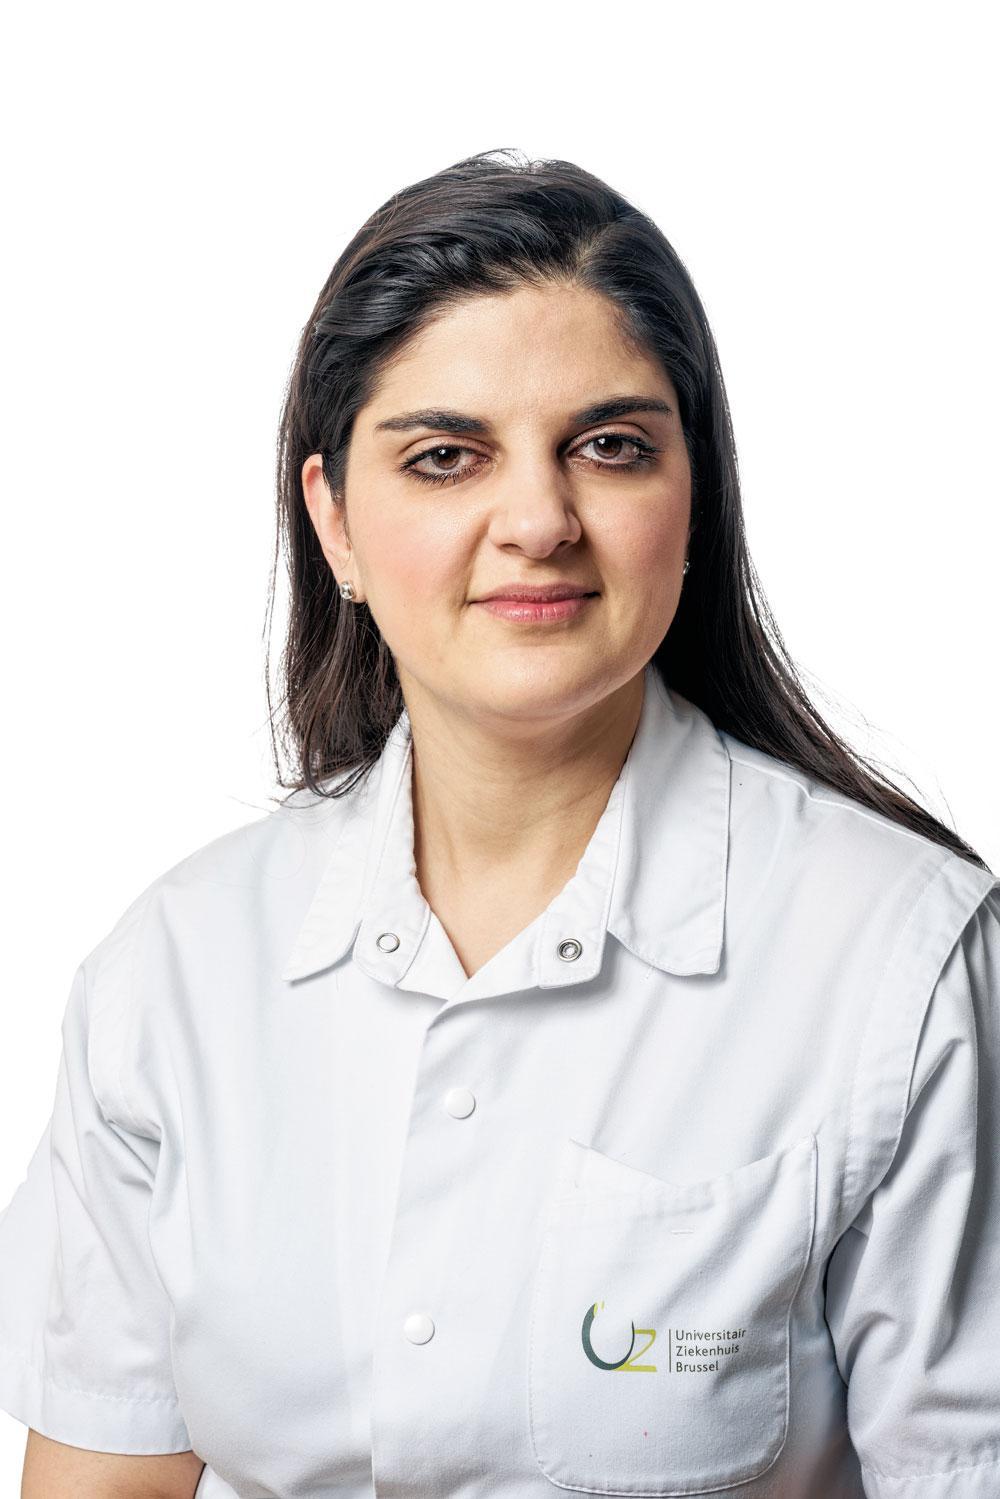 Dr Samira Baharlou (UZ Brussel)